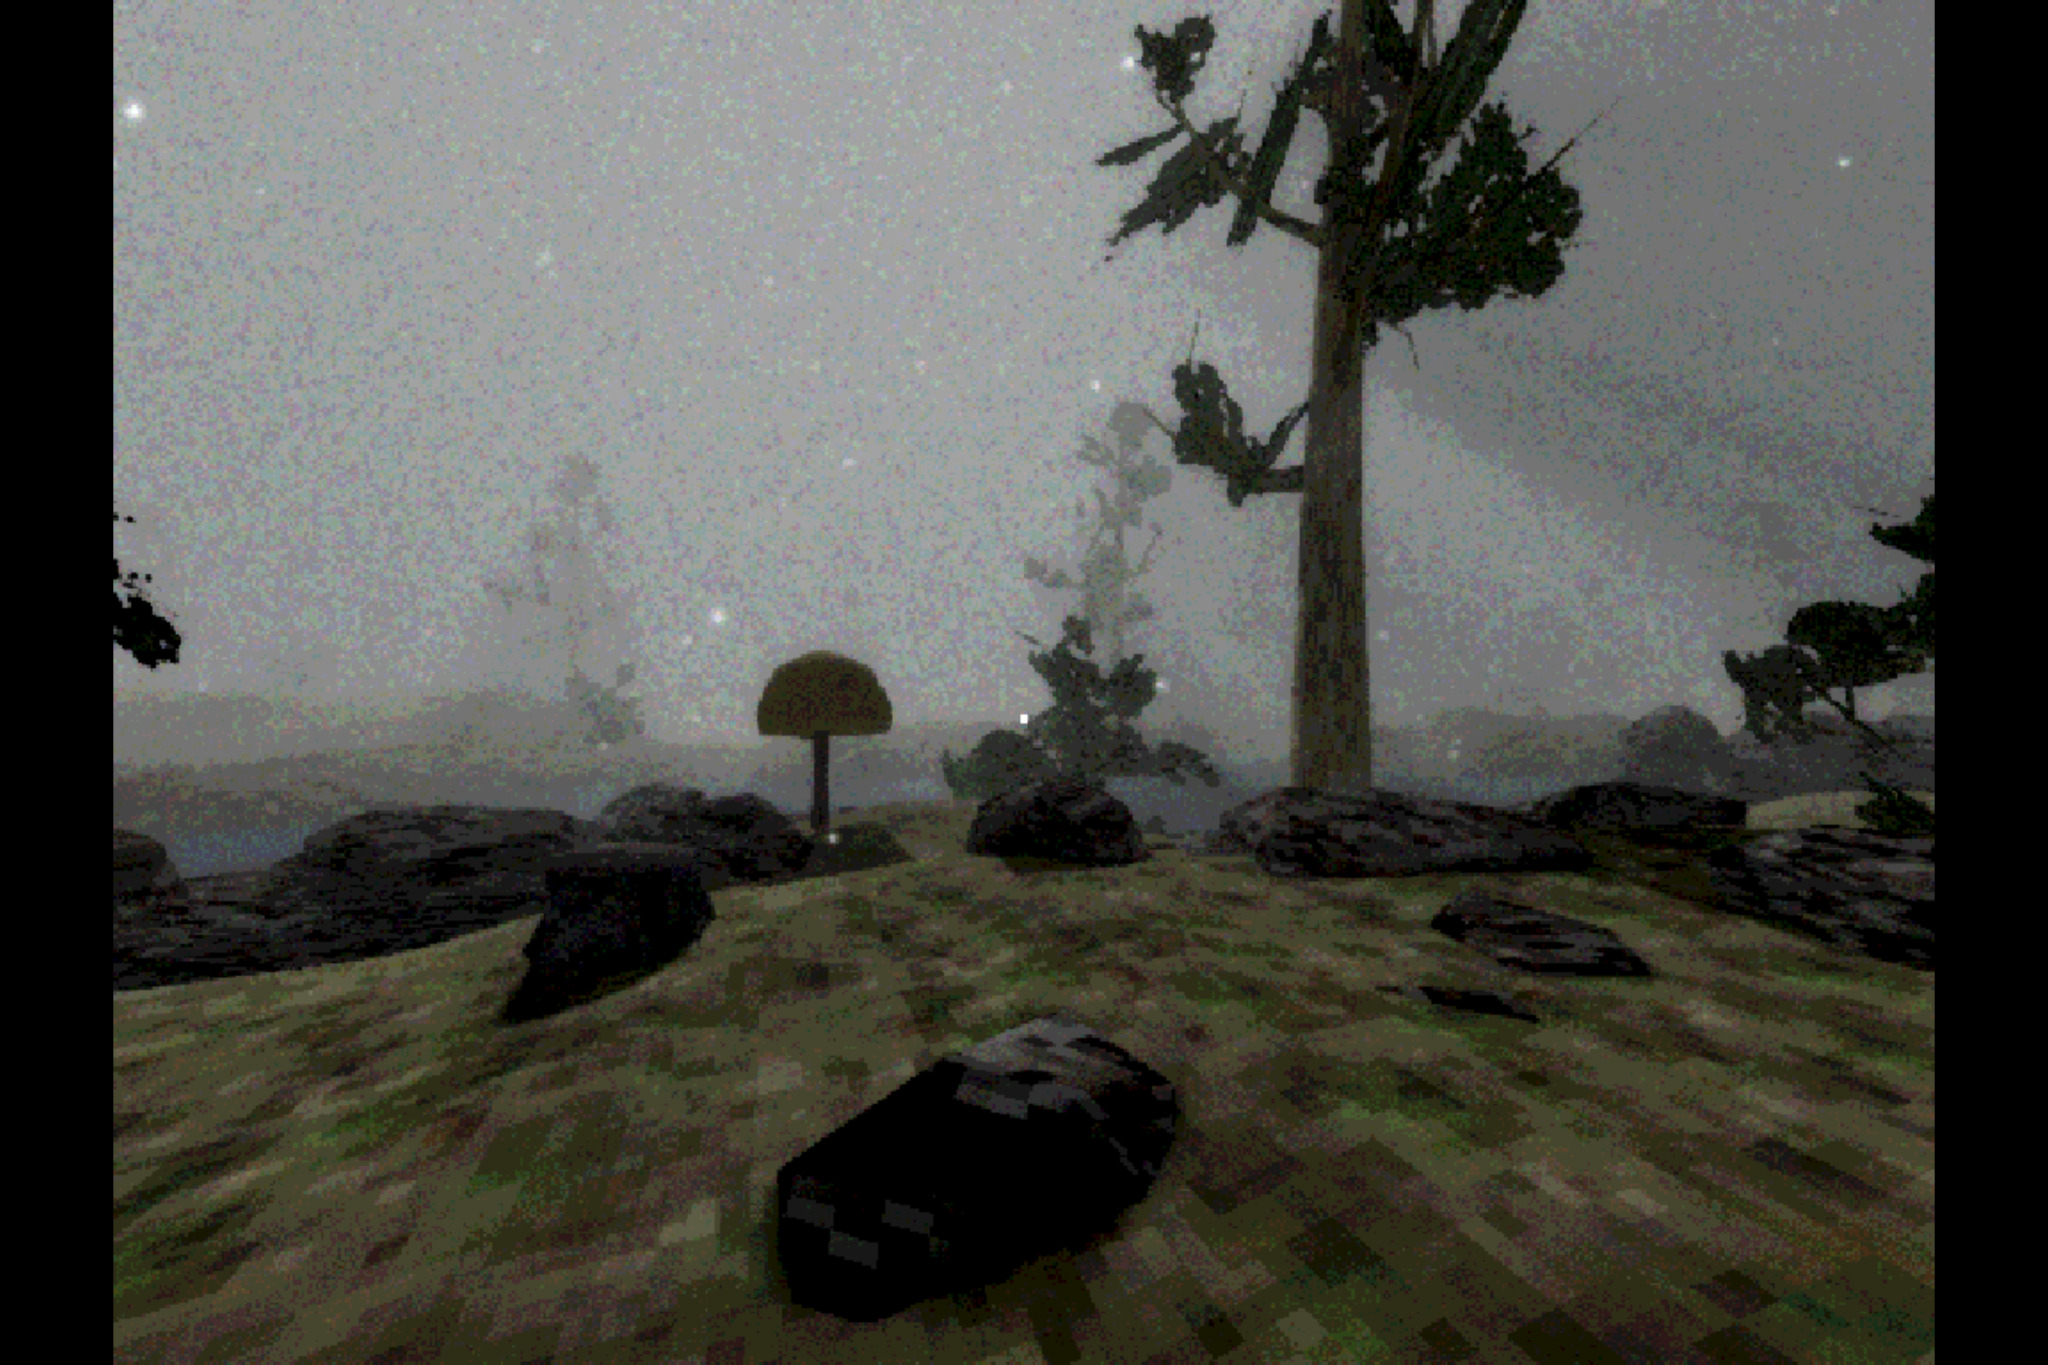 eerie swamp with giant mushrooms